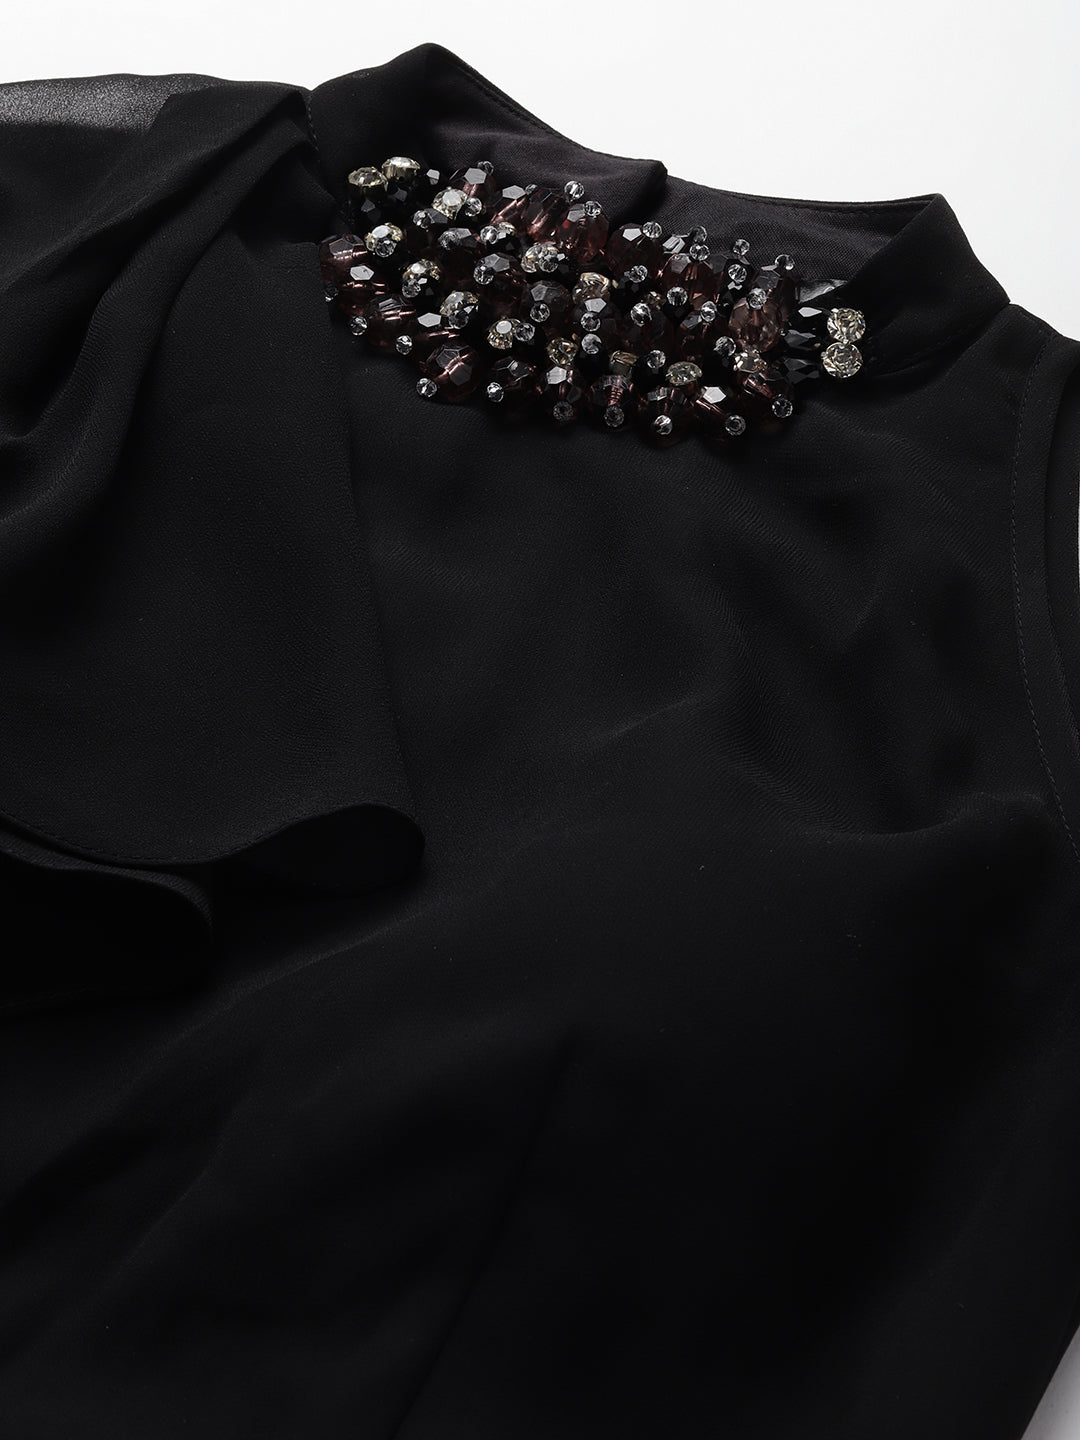 Black Solid Maxi Dress with Embellished Neck